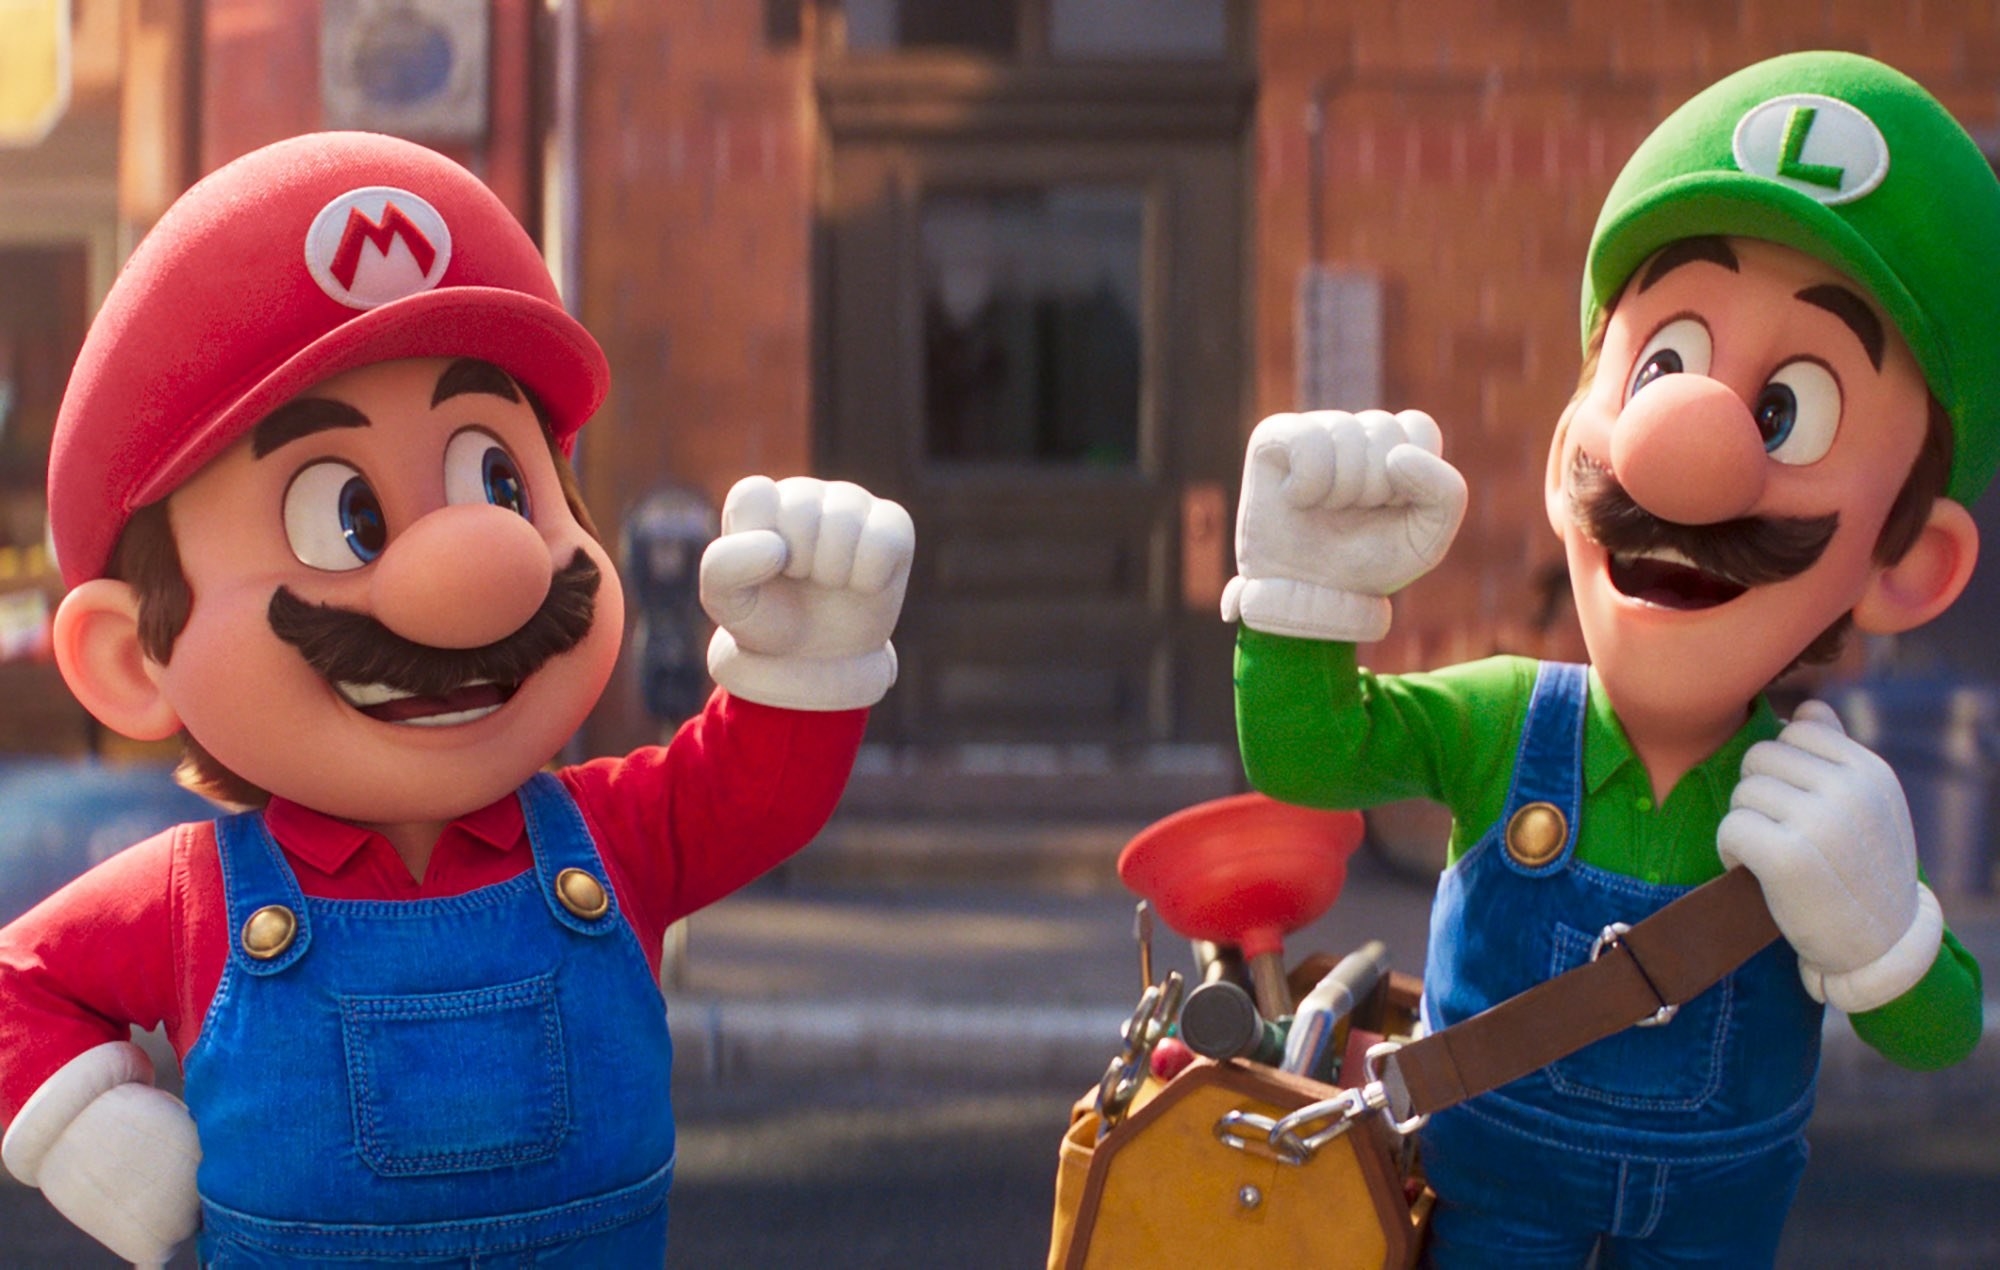 Mario and Luigi fist pumping